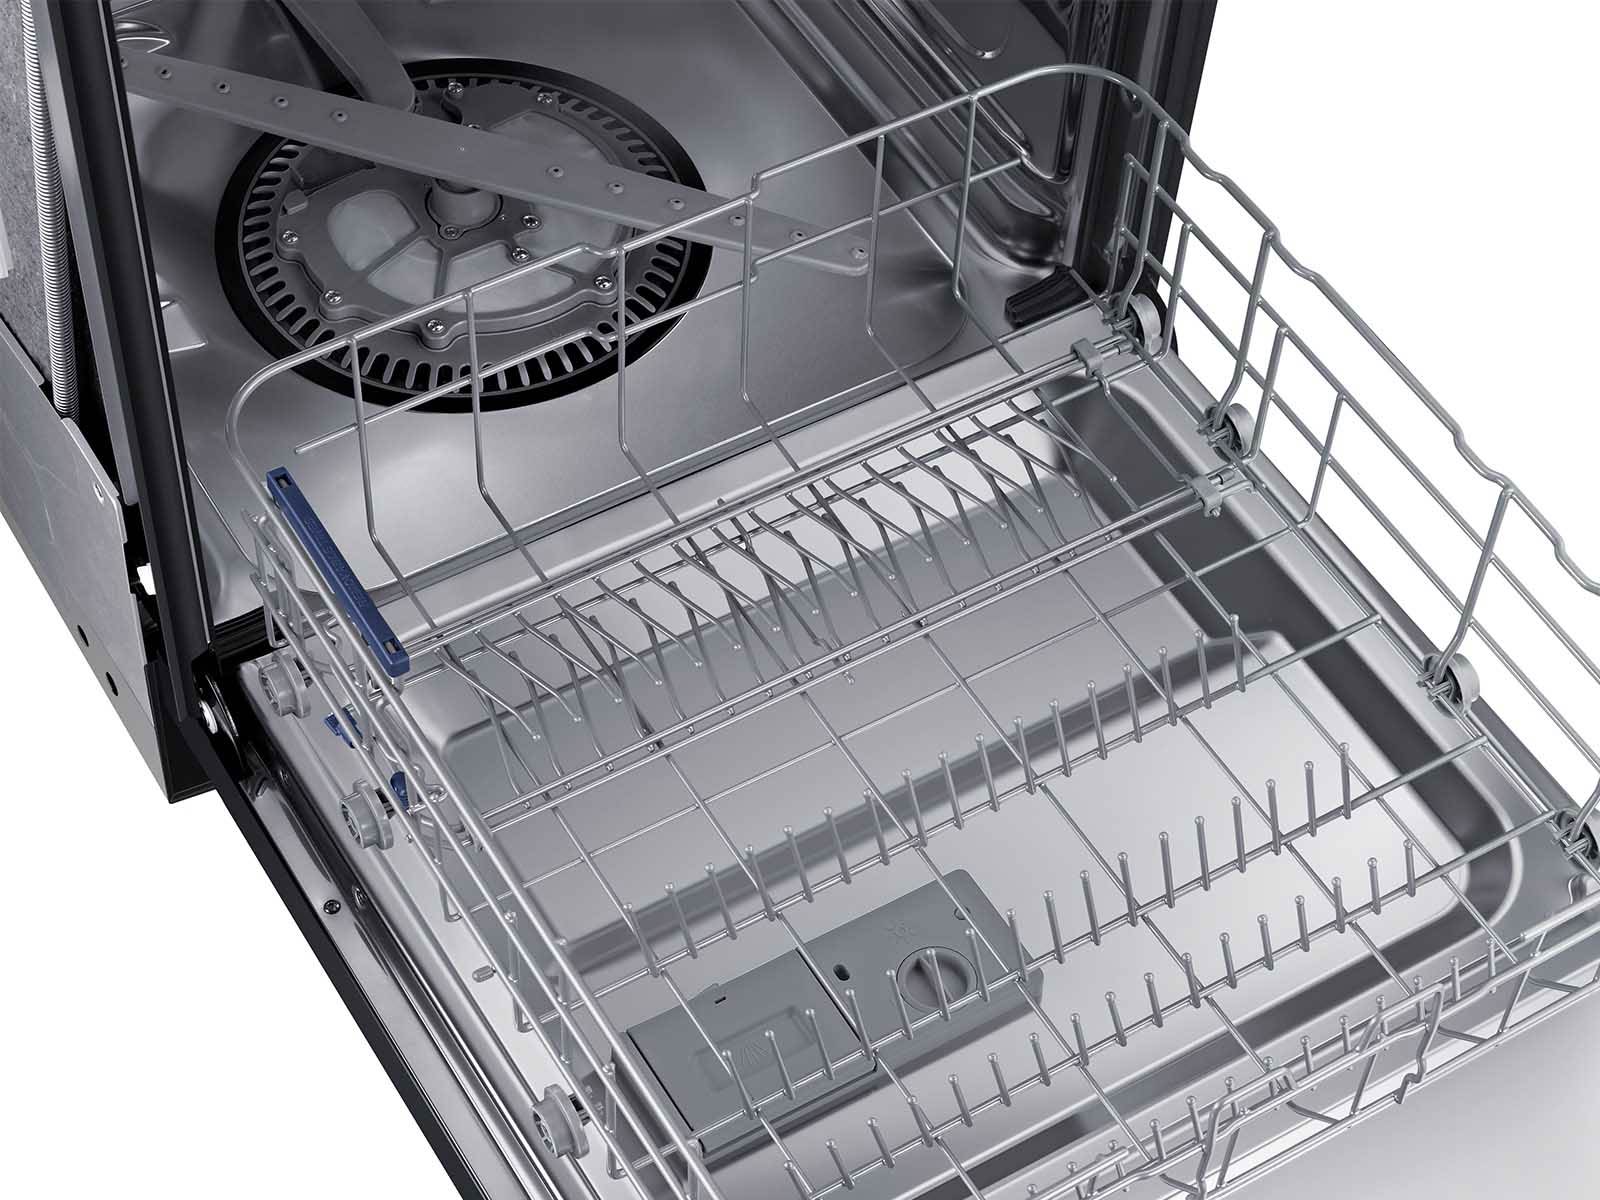 stainless steel dishwasher inside